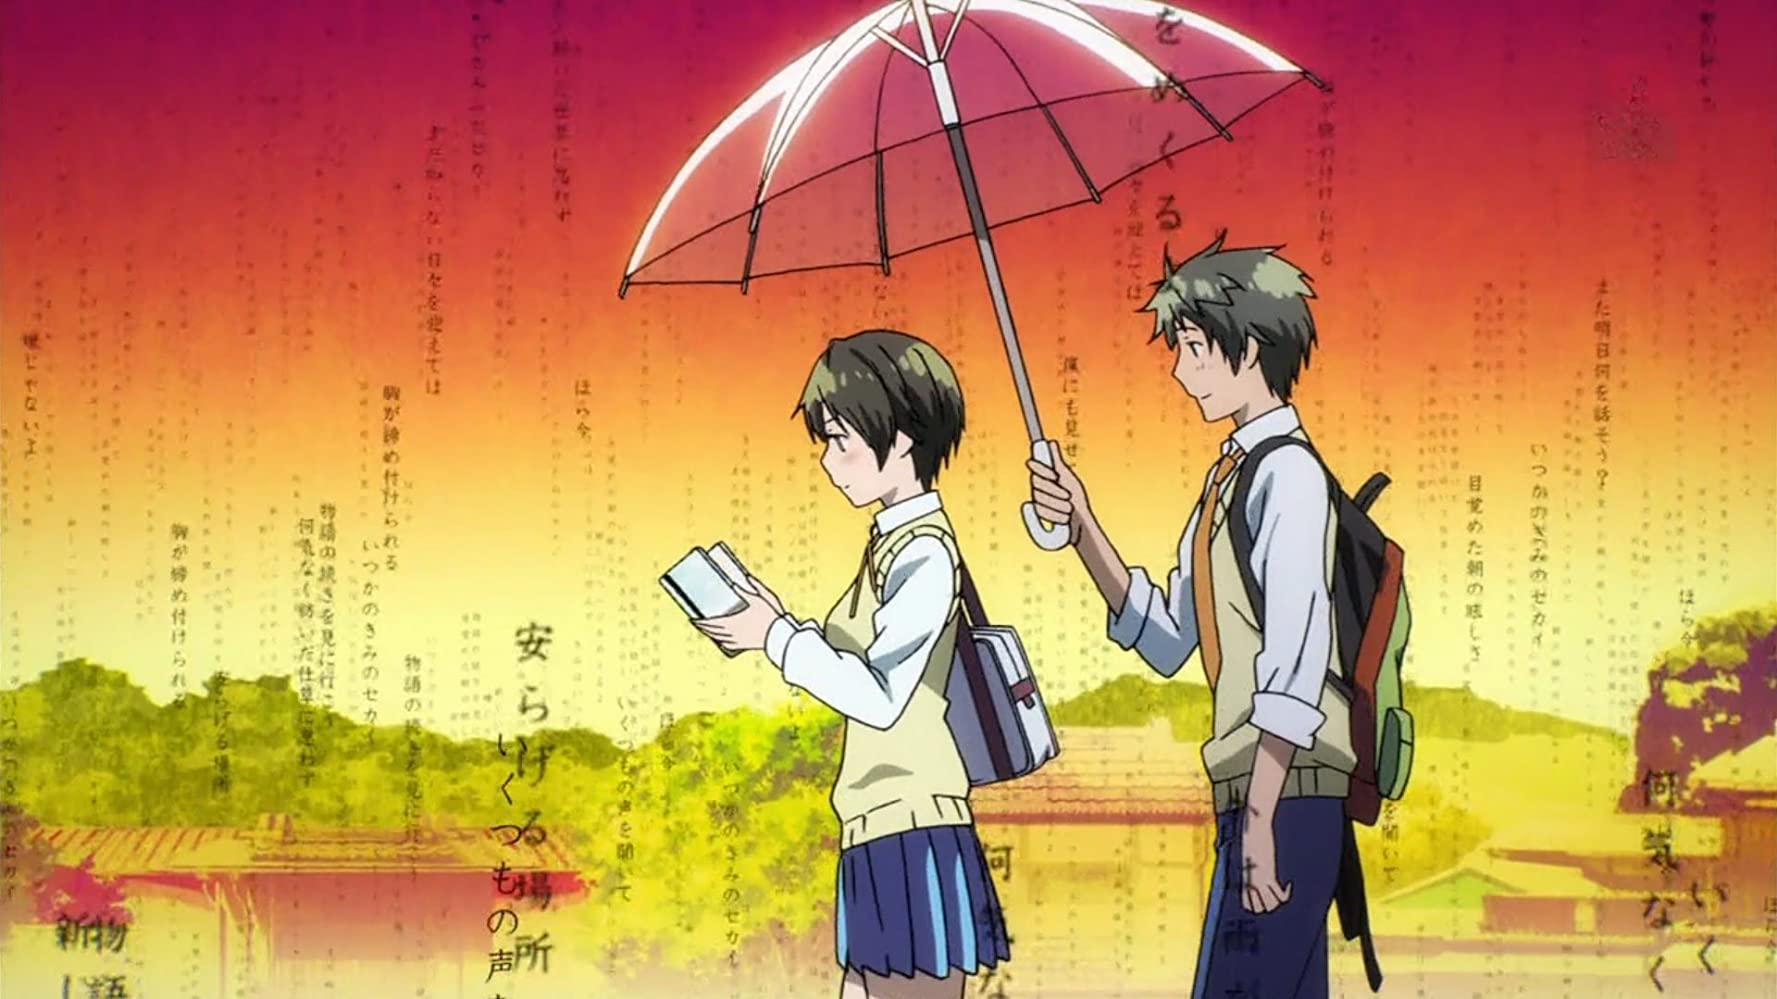 romantic anime series - walking in the rain